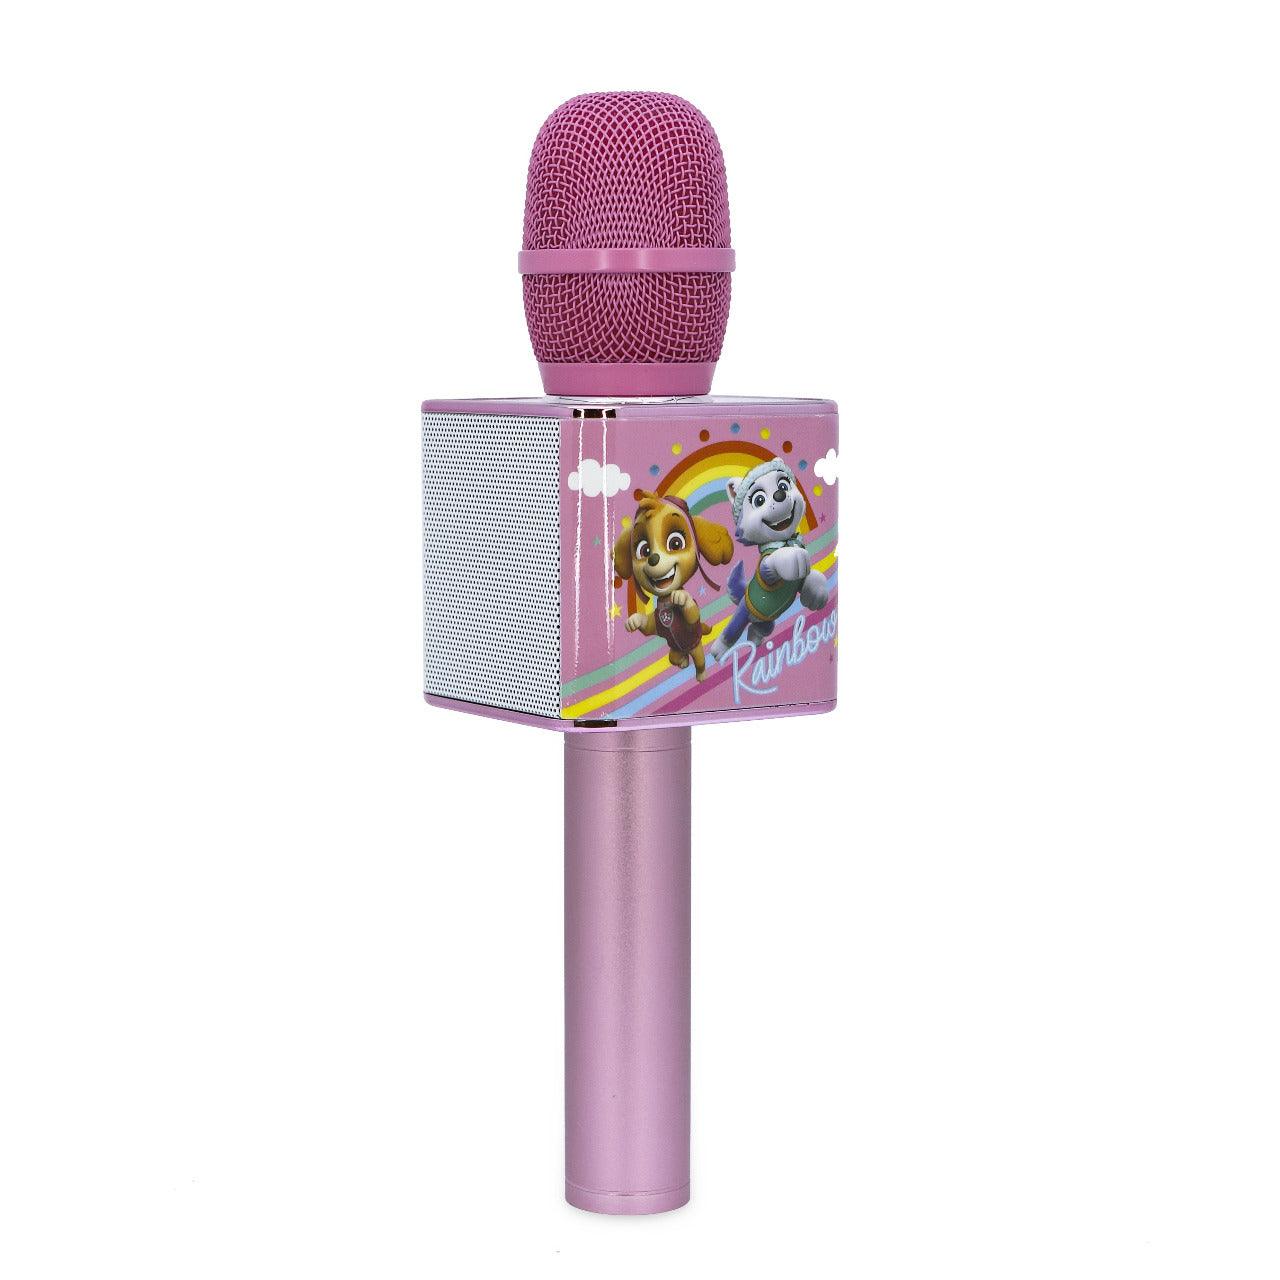 PAW Patrol Wireless Karaoke Microphone Pink - childrensheadphones.co.uk